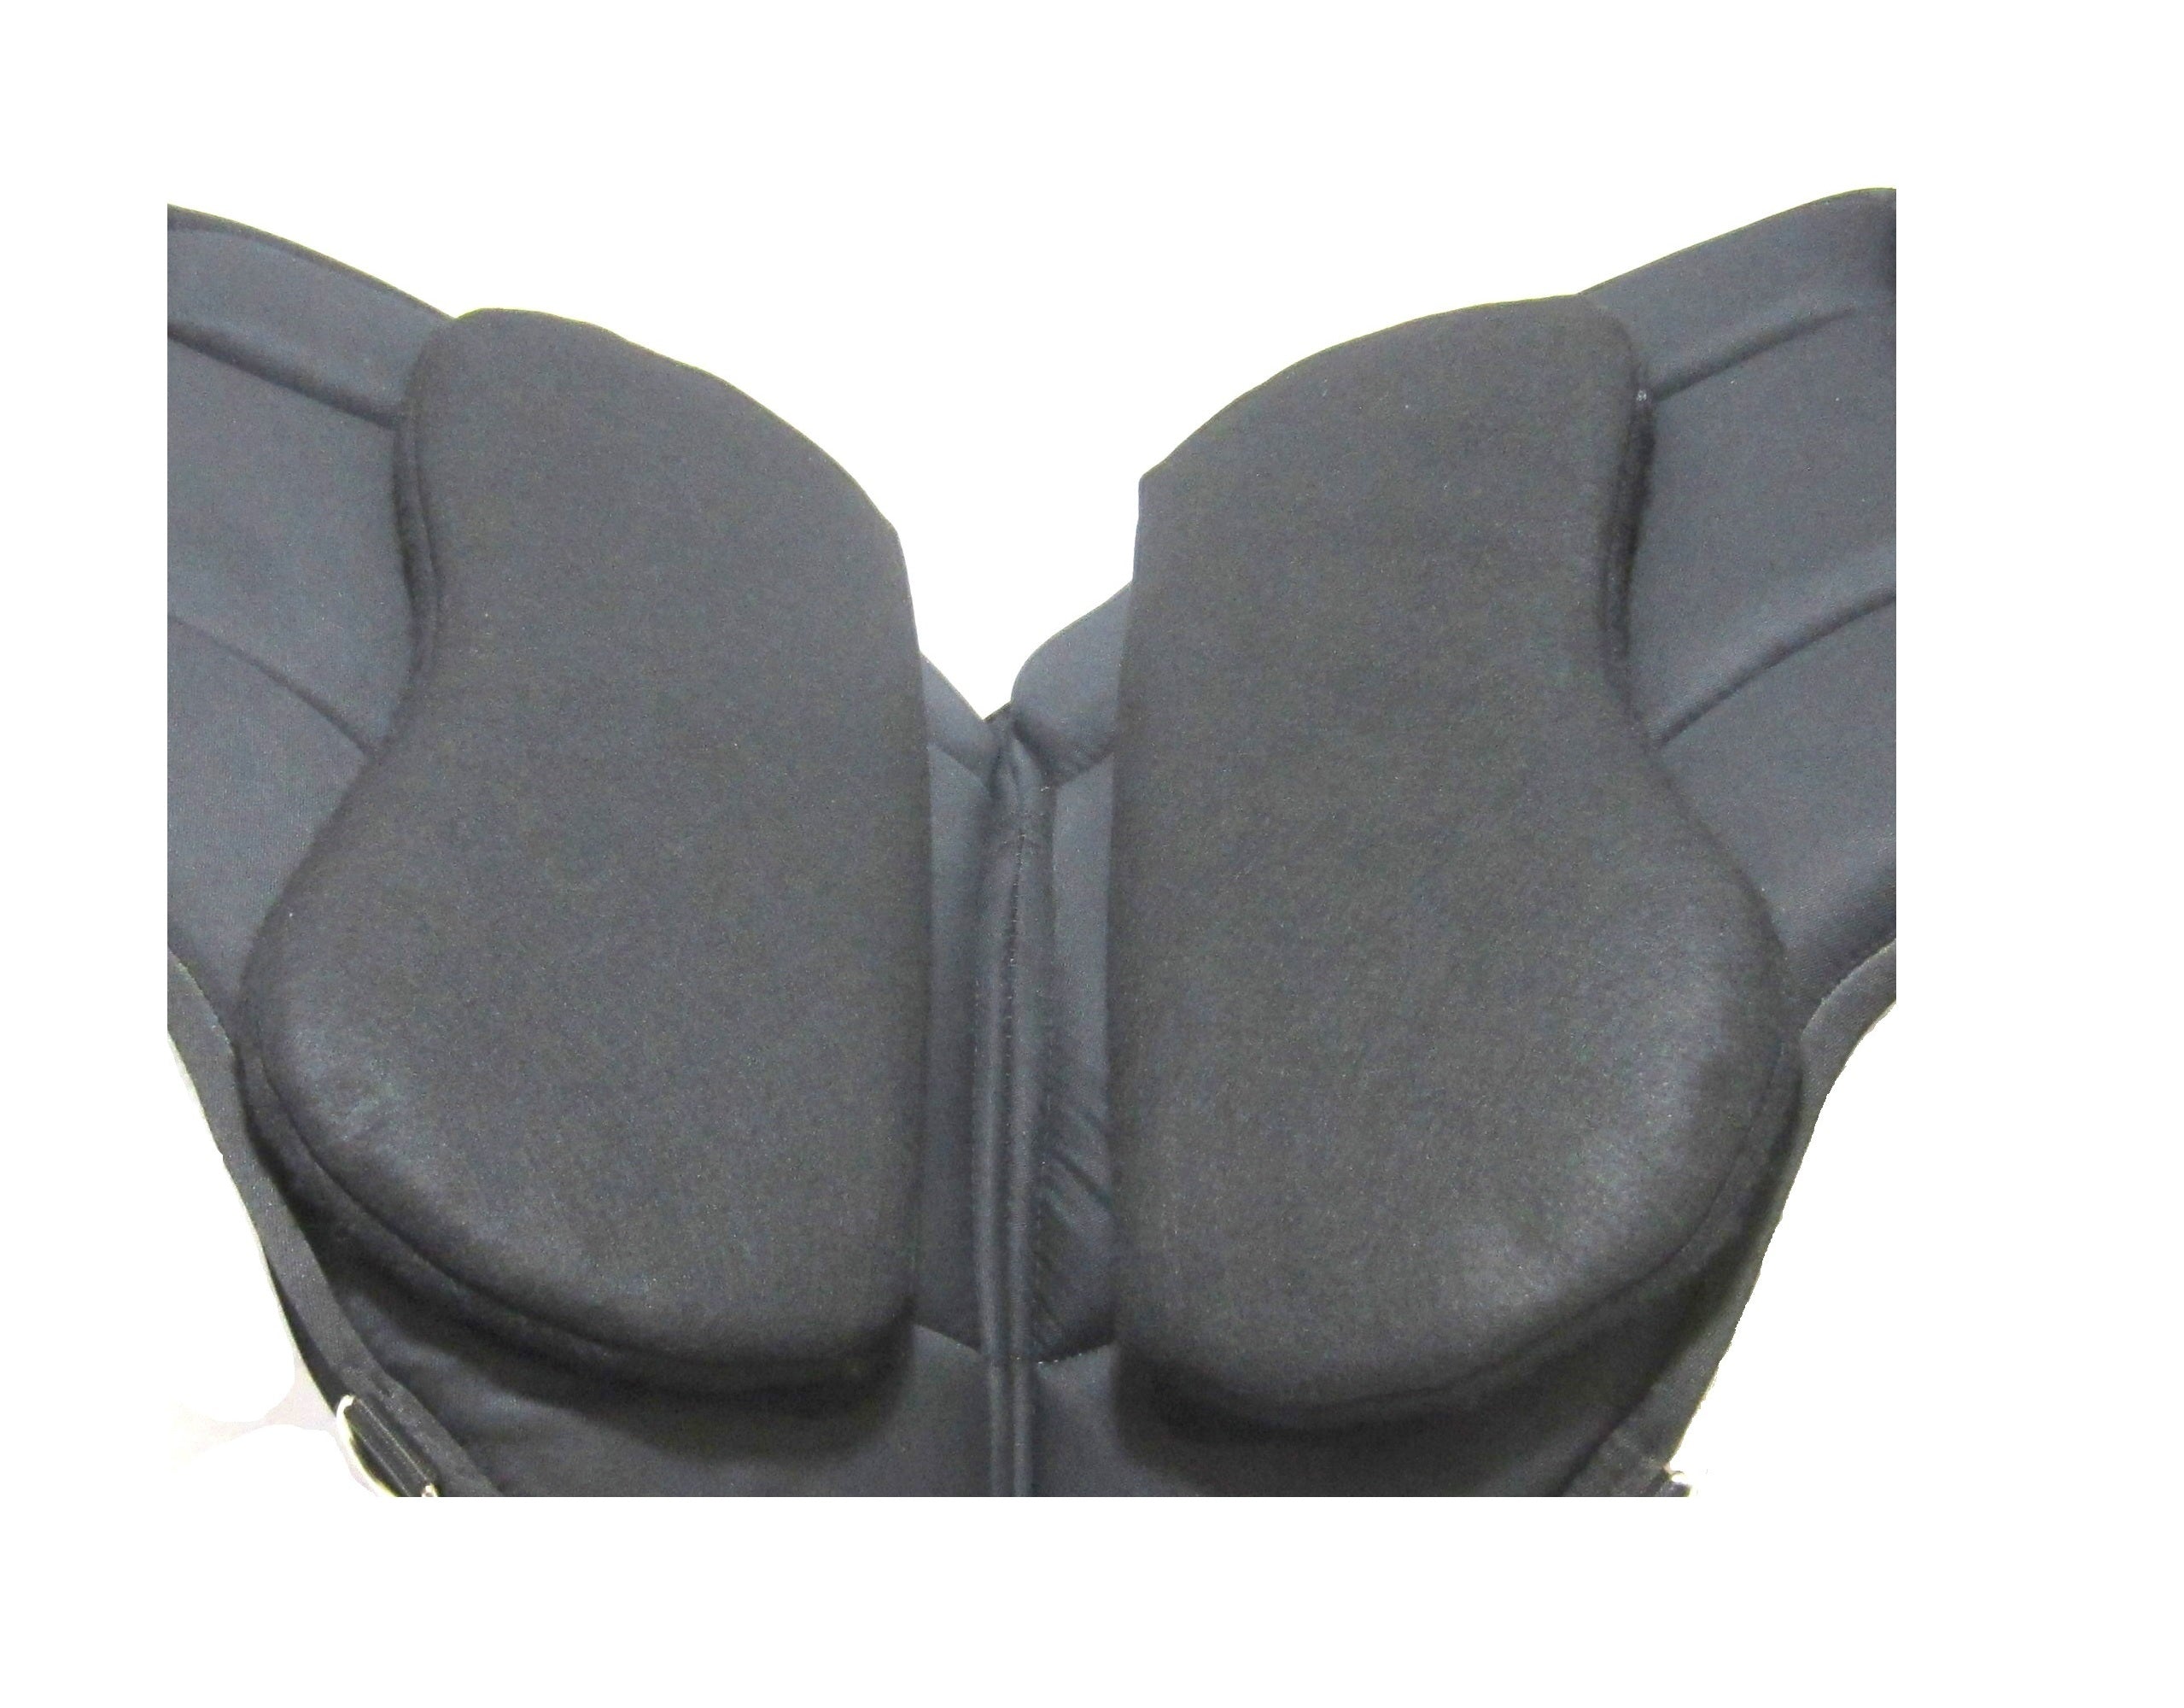 Velcro &amp; fillable felt cushions for flexible &amp; treeless saddles or pads - standard shape